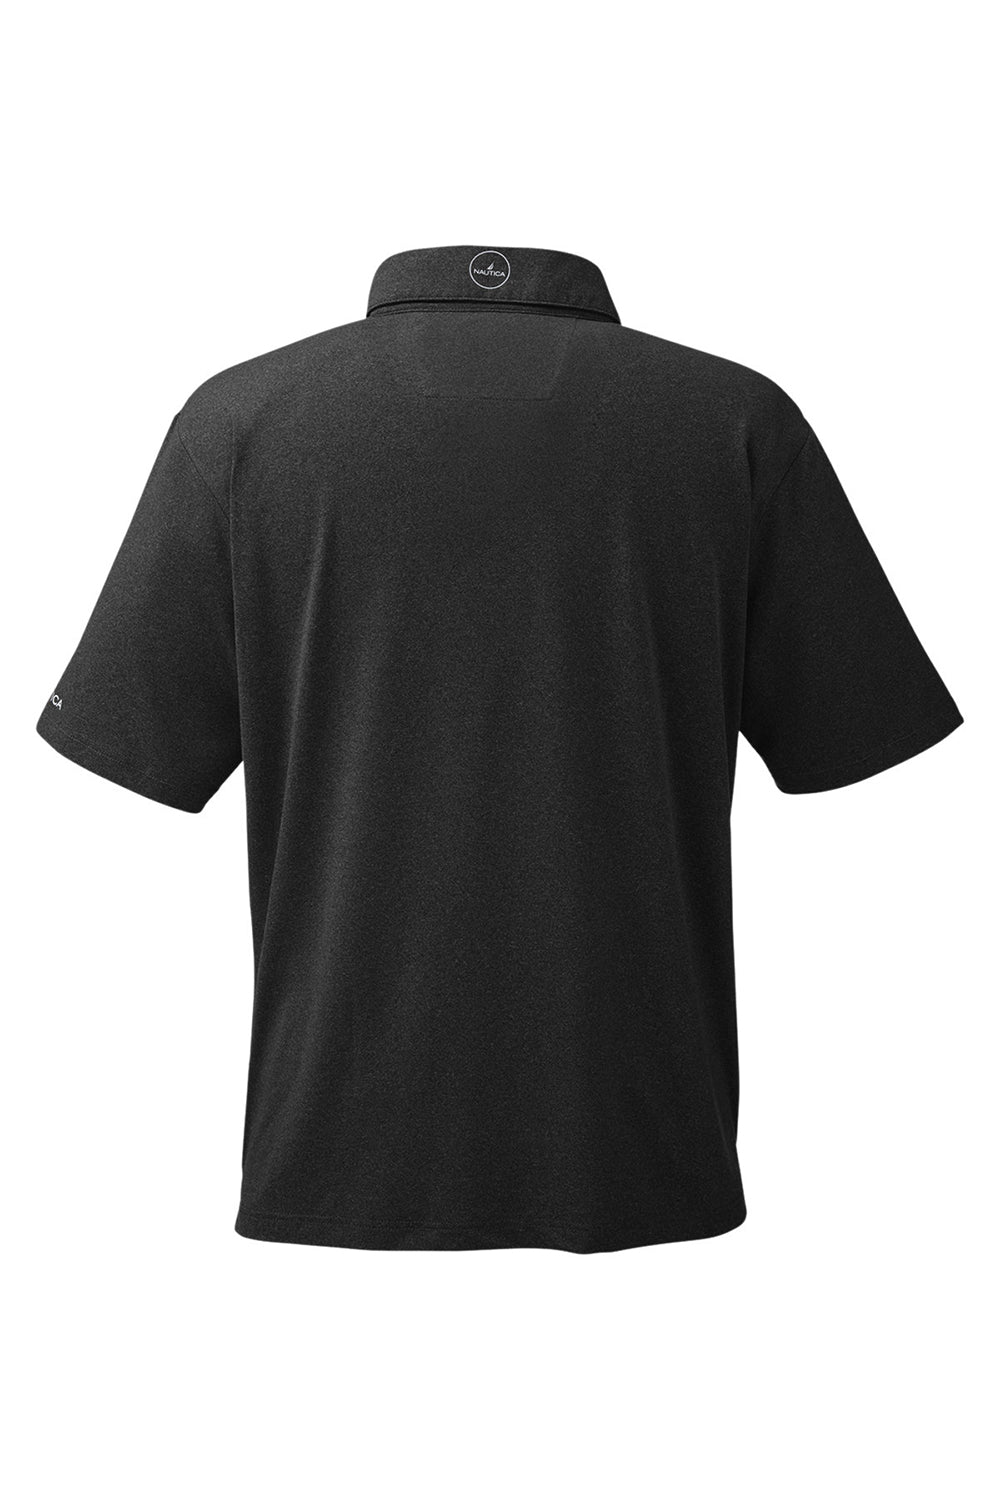 Nautica N17922 Mens Saltwater Short Sleeve Polo Shirt Onyx Black Flat Back